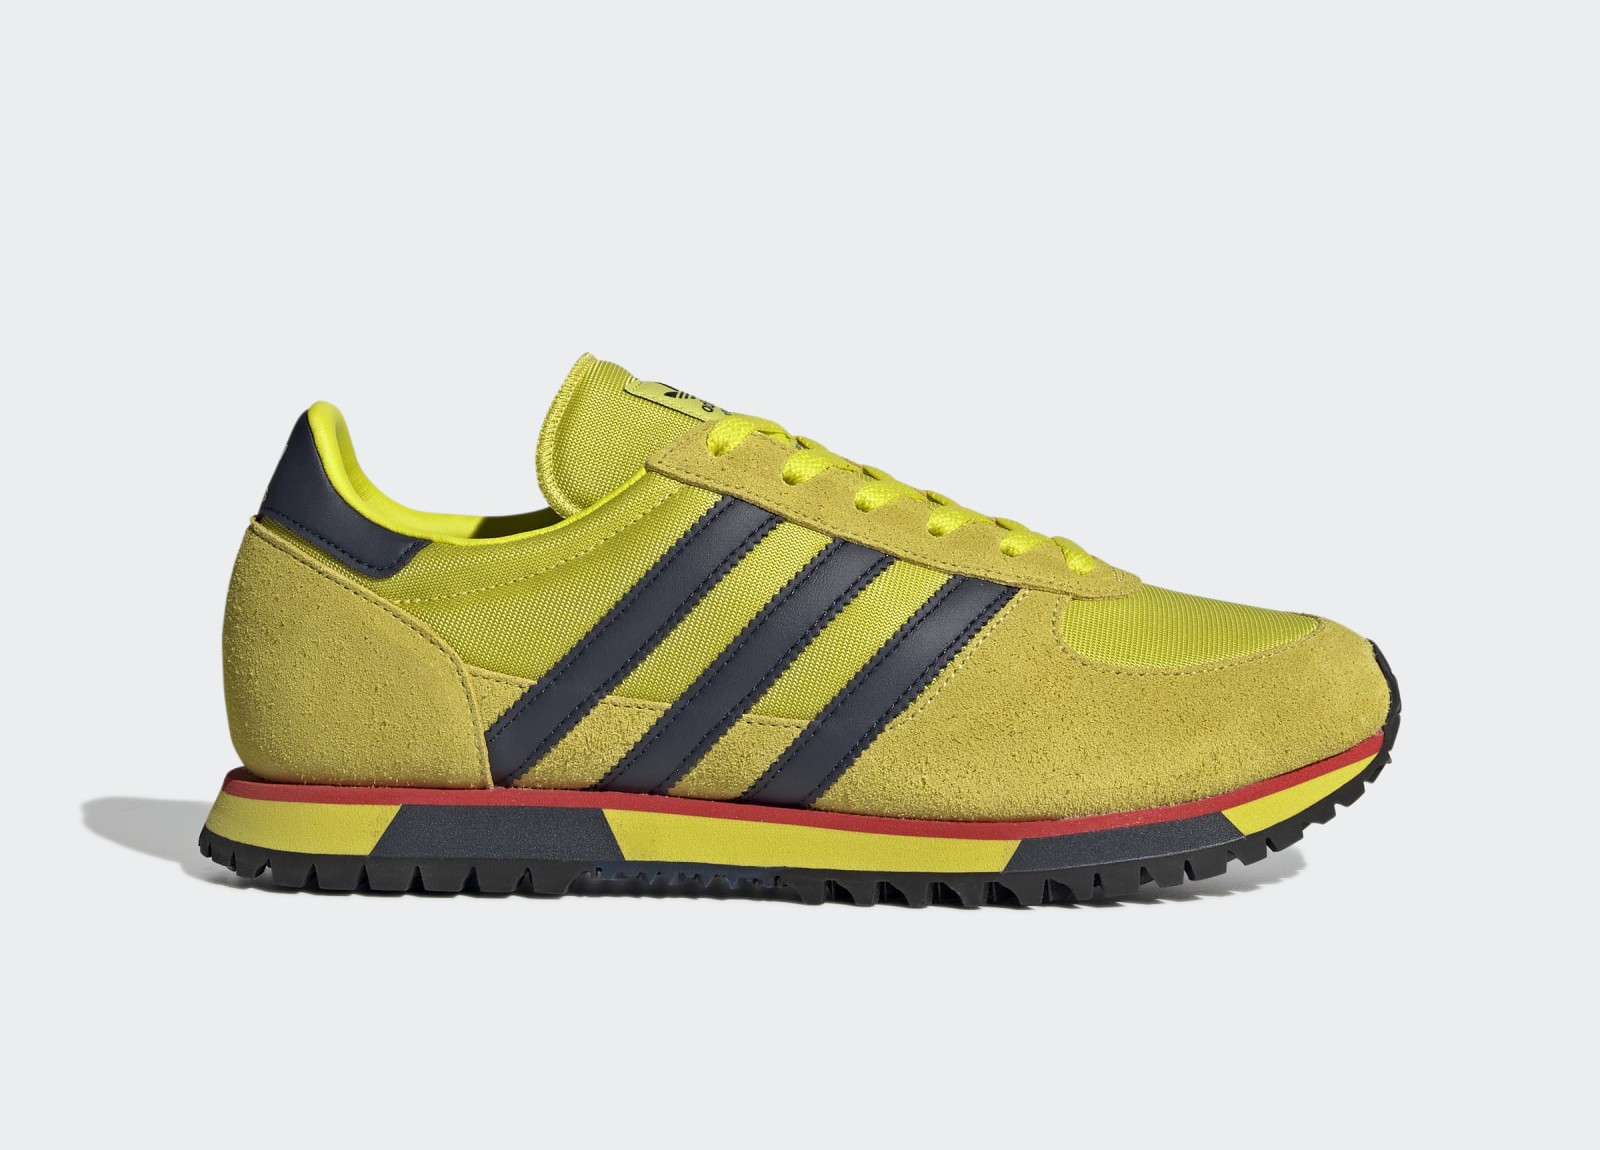 Adidas SPZL Marathon 86
Navy / Yellow